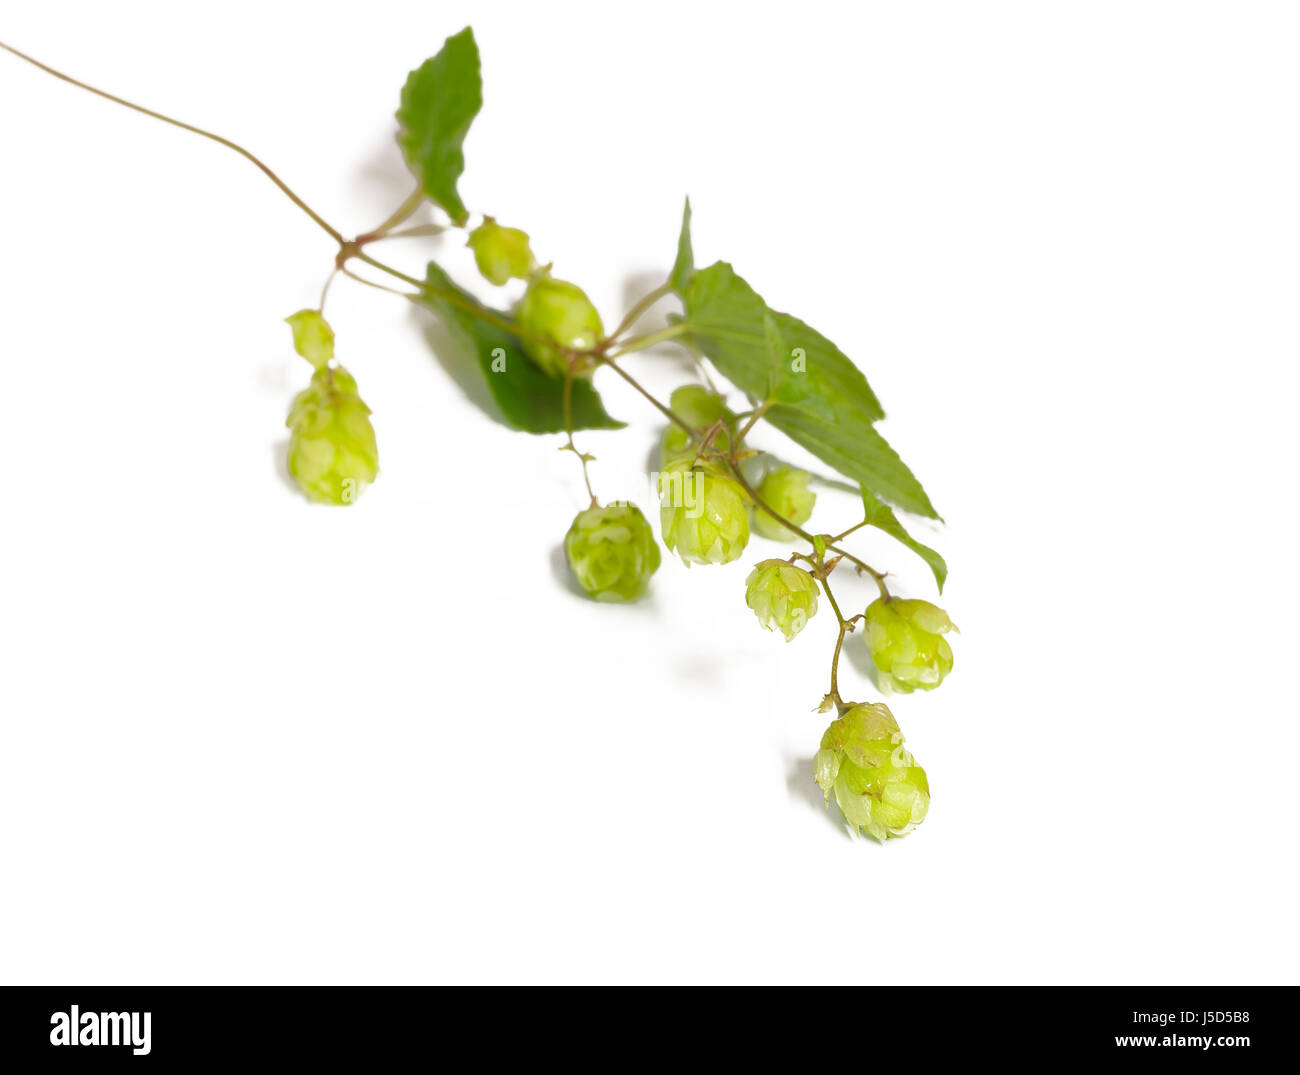 Pianta selvatica verde lascia vuoto europeo fiori caucasica sperma birra hop di spurgo Foto Stock